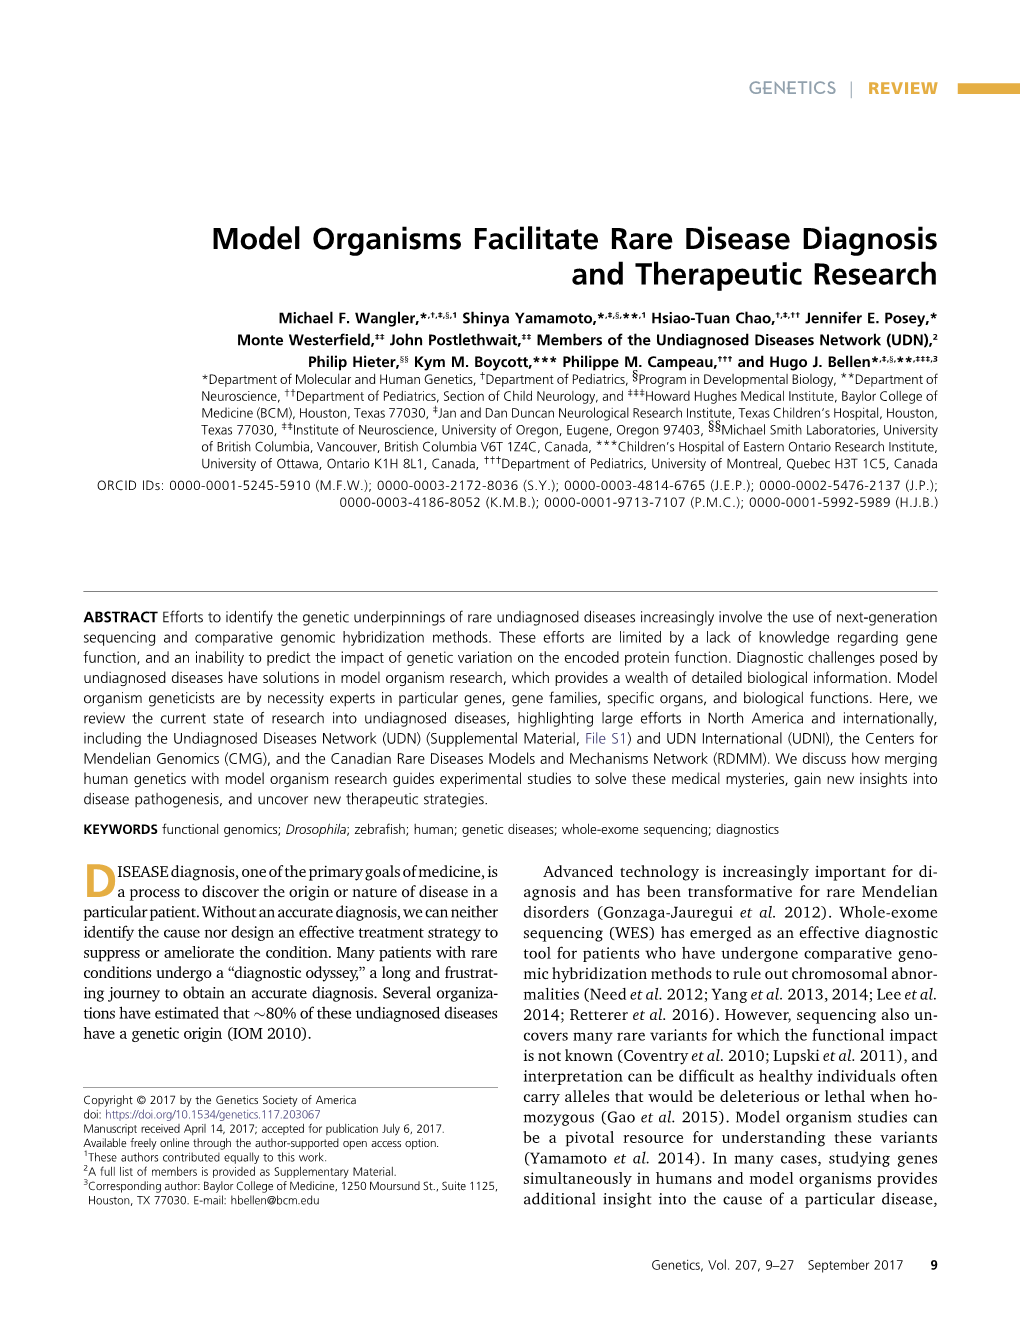 Model Organisms Facilitate Rare Disease Diagnosis and Therapeutic Research